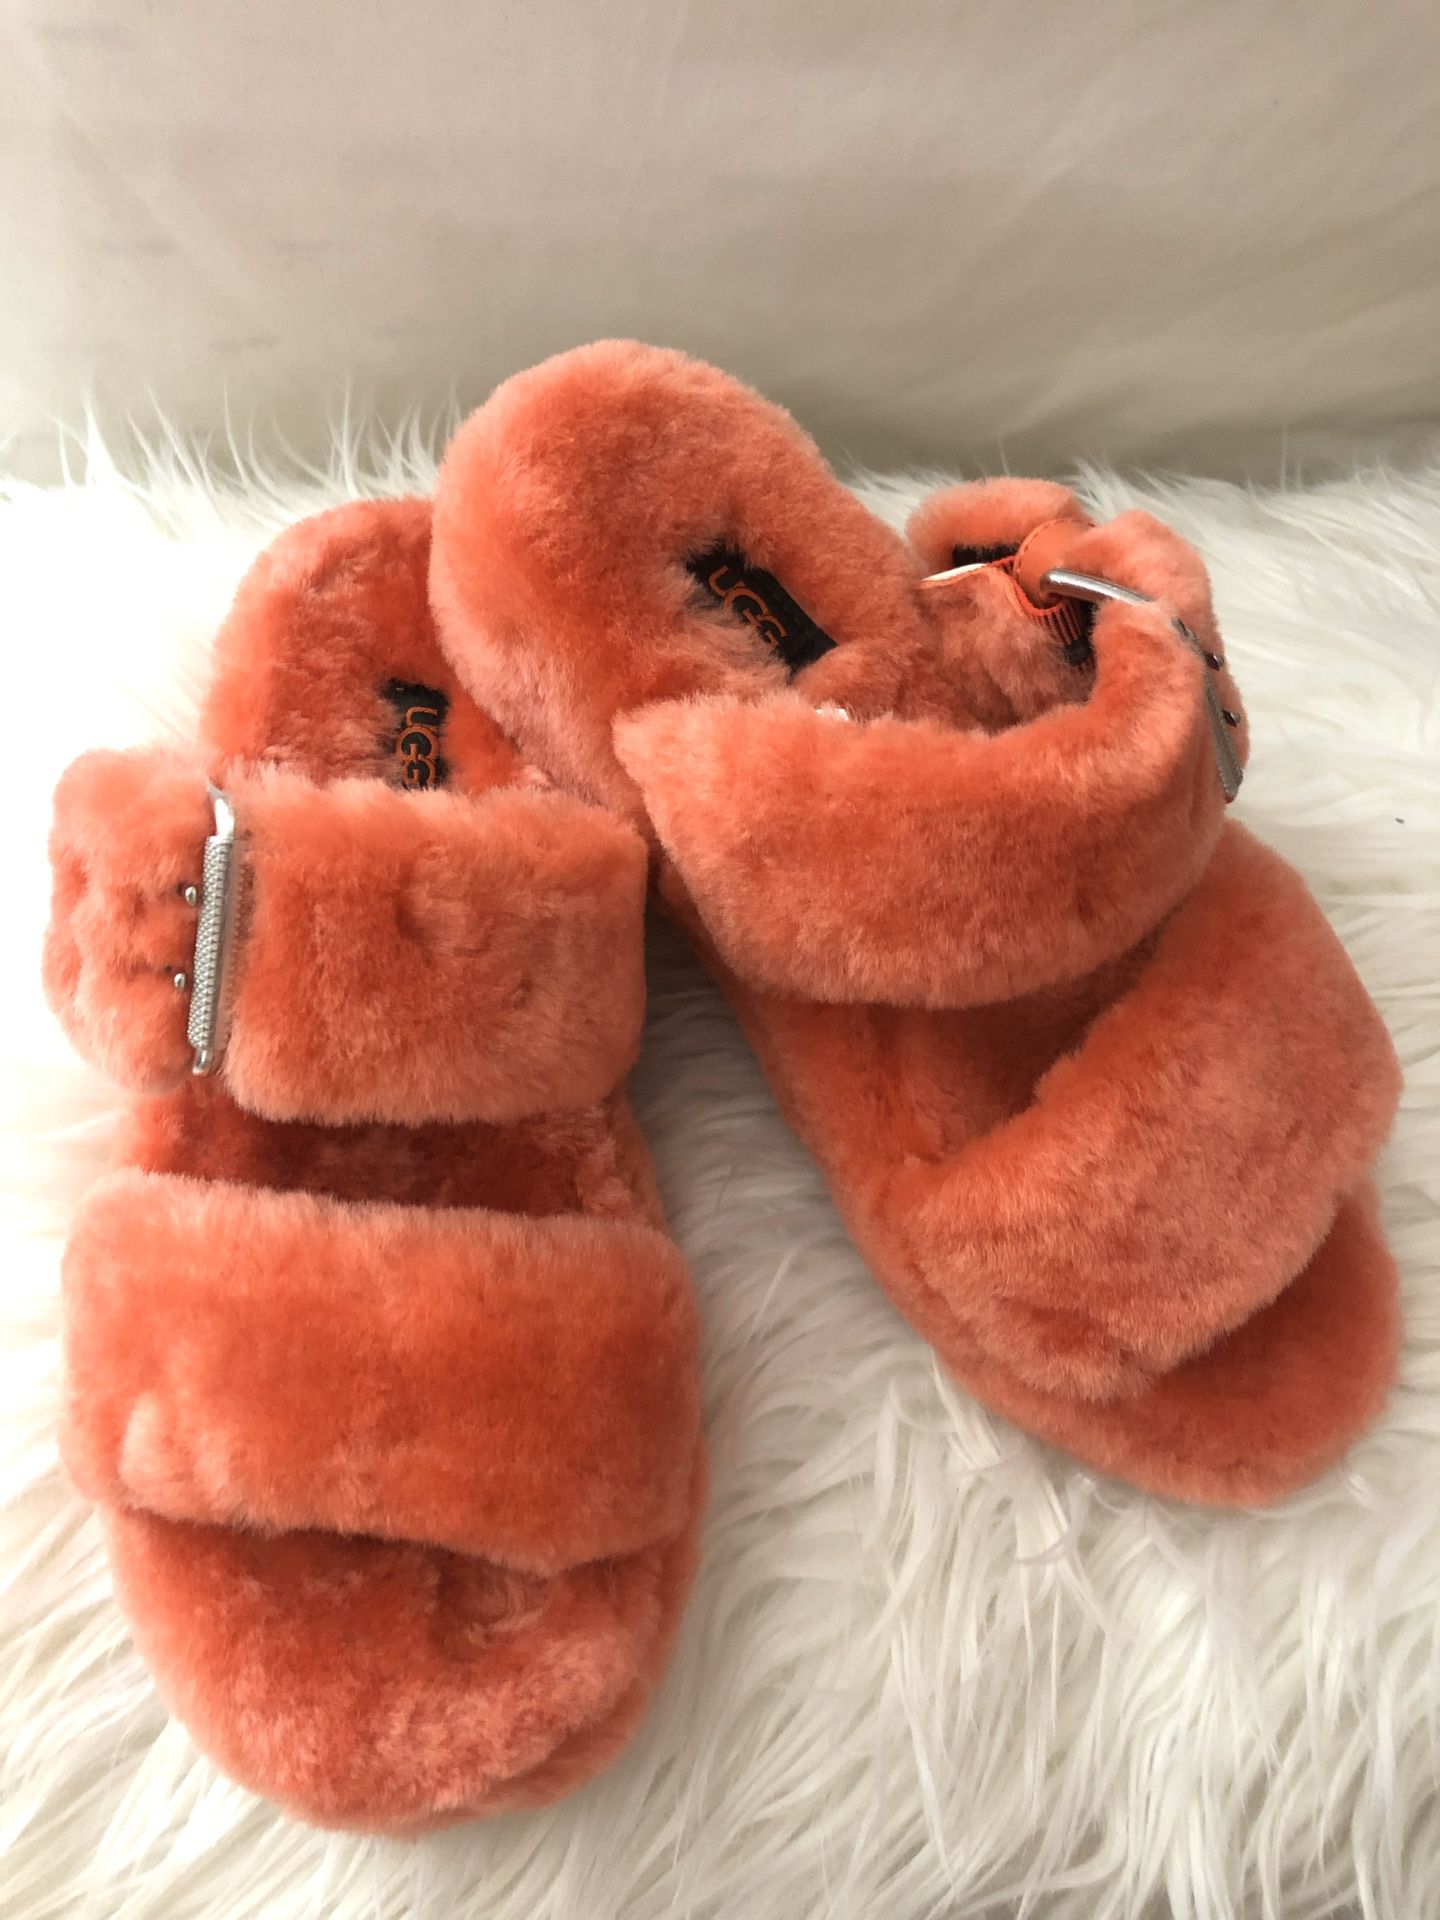 Ugg slippers